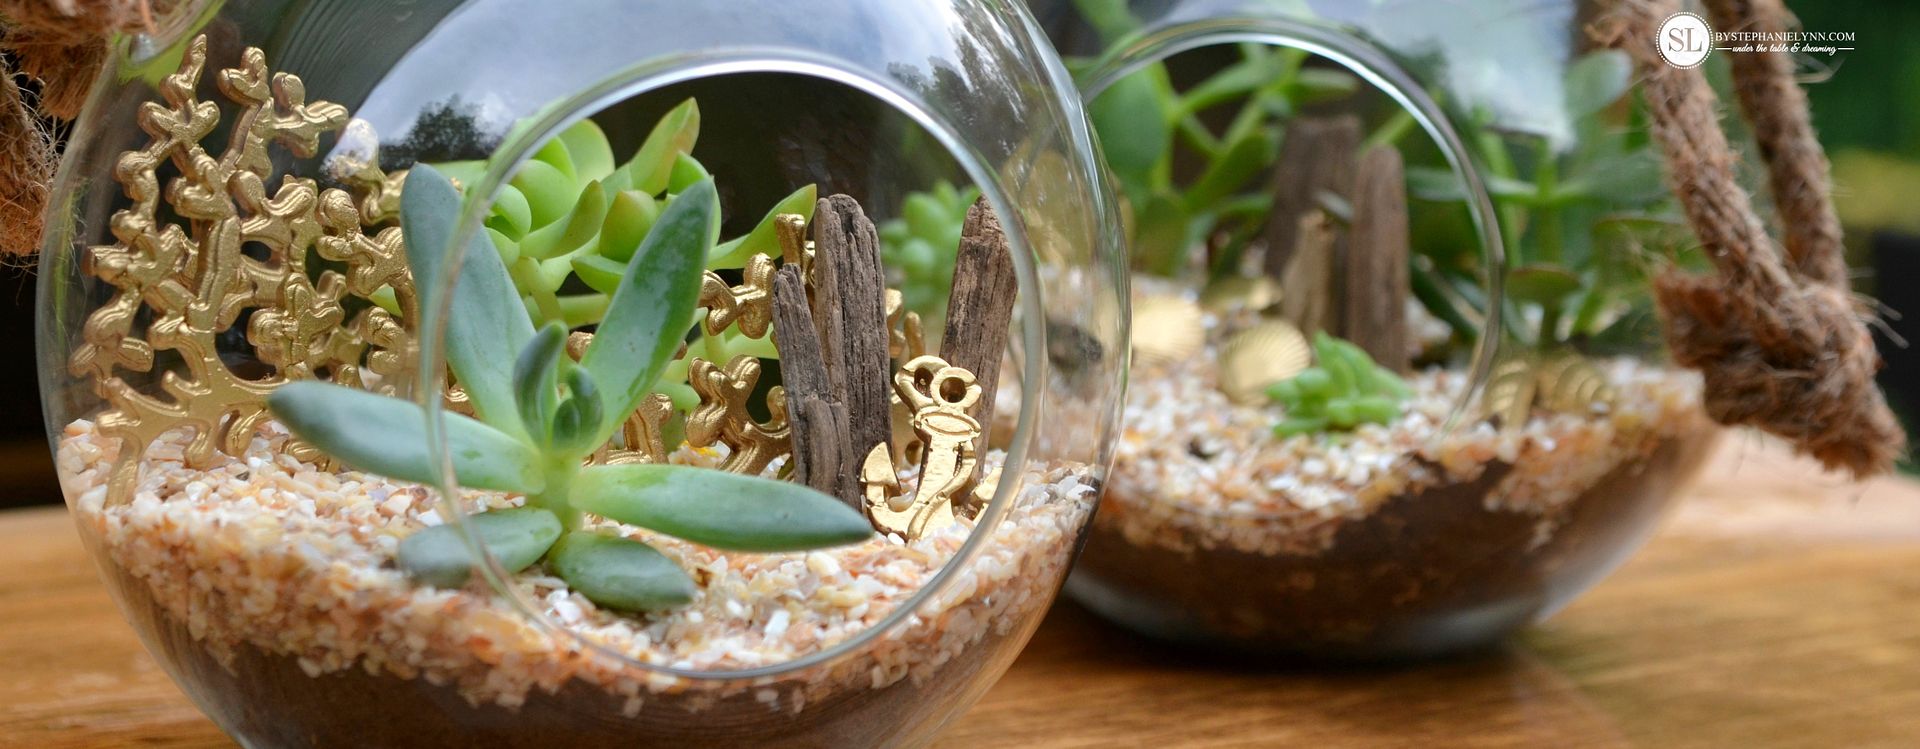 Beach Terrarium | Make your own succulent garden accessories with Friendly Plastic #michaelsmakers 